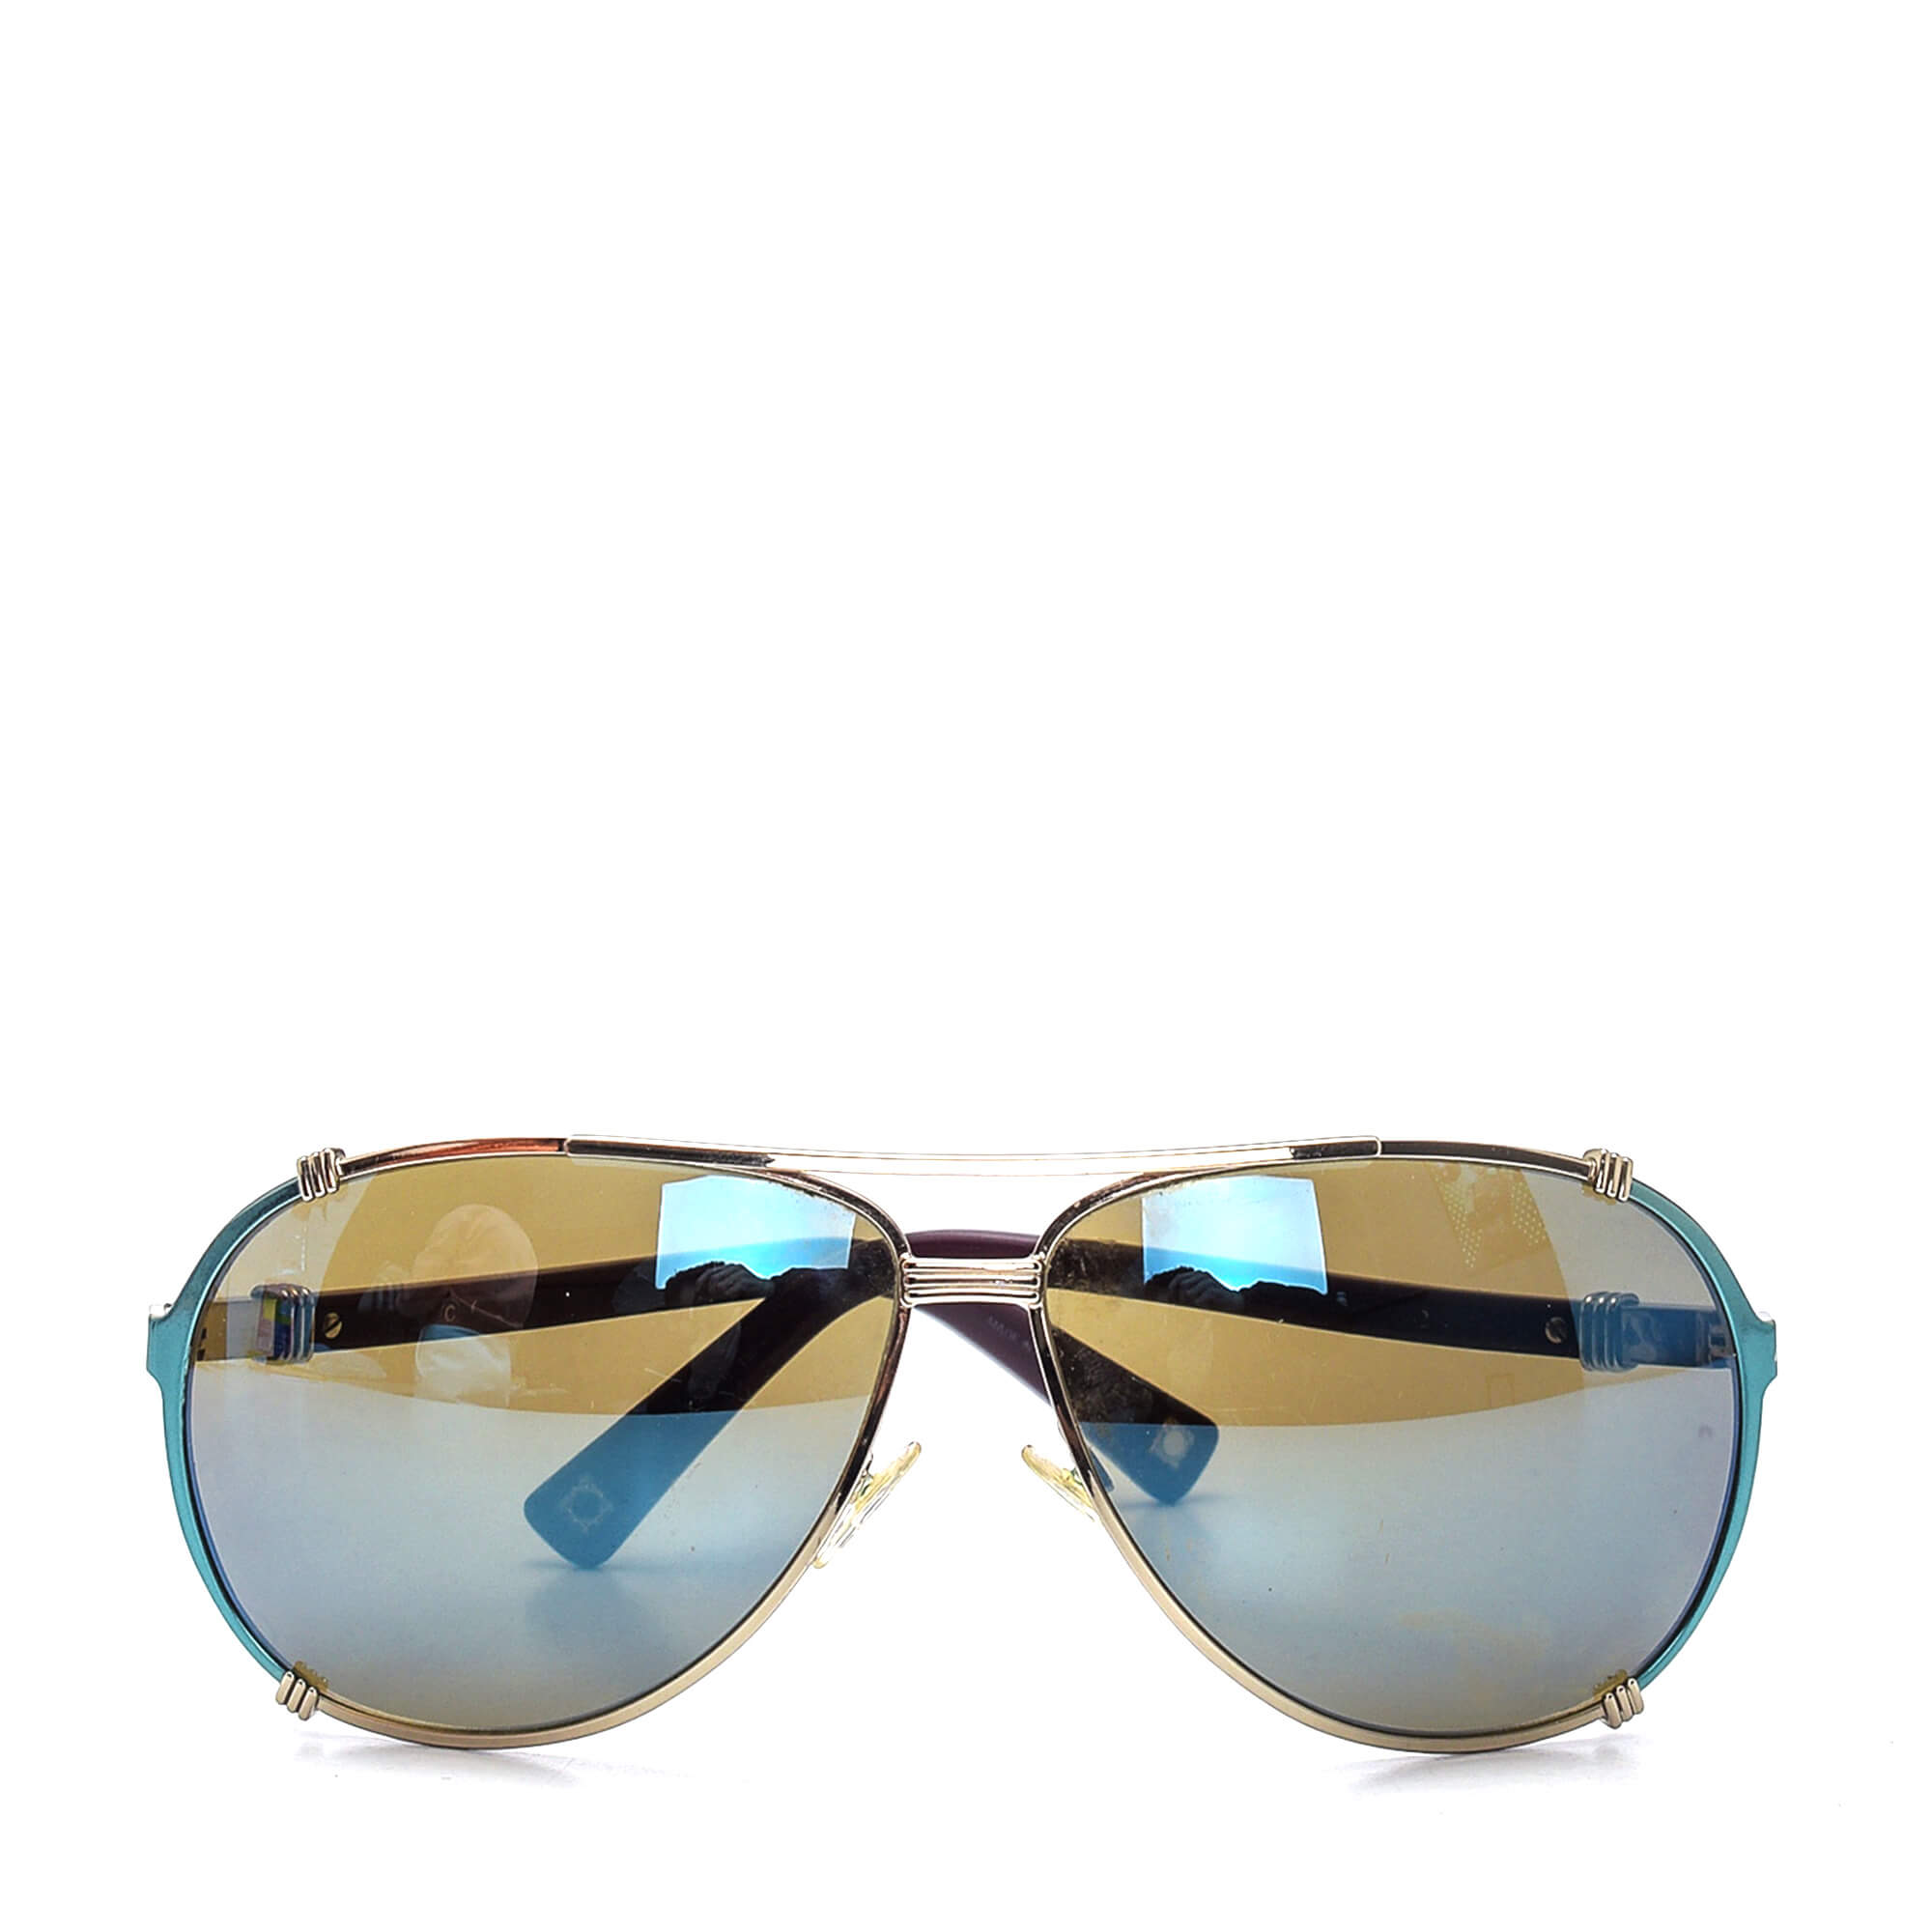 Christian Dior - Aviator Sunglasses 